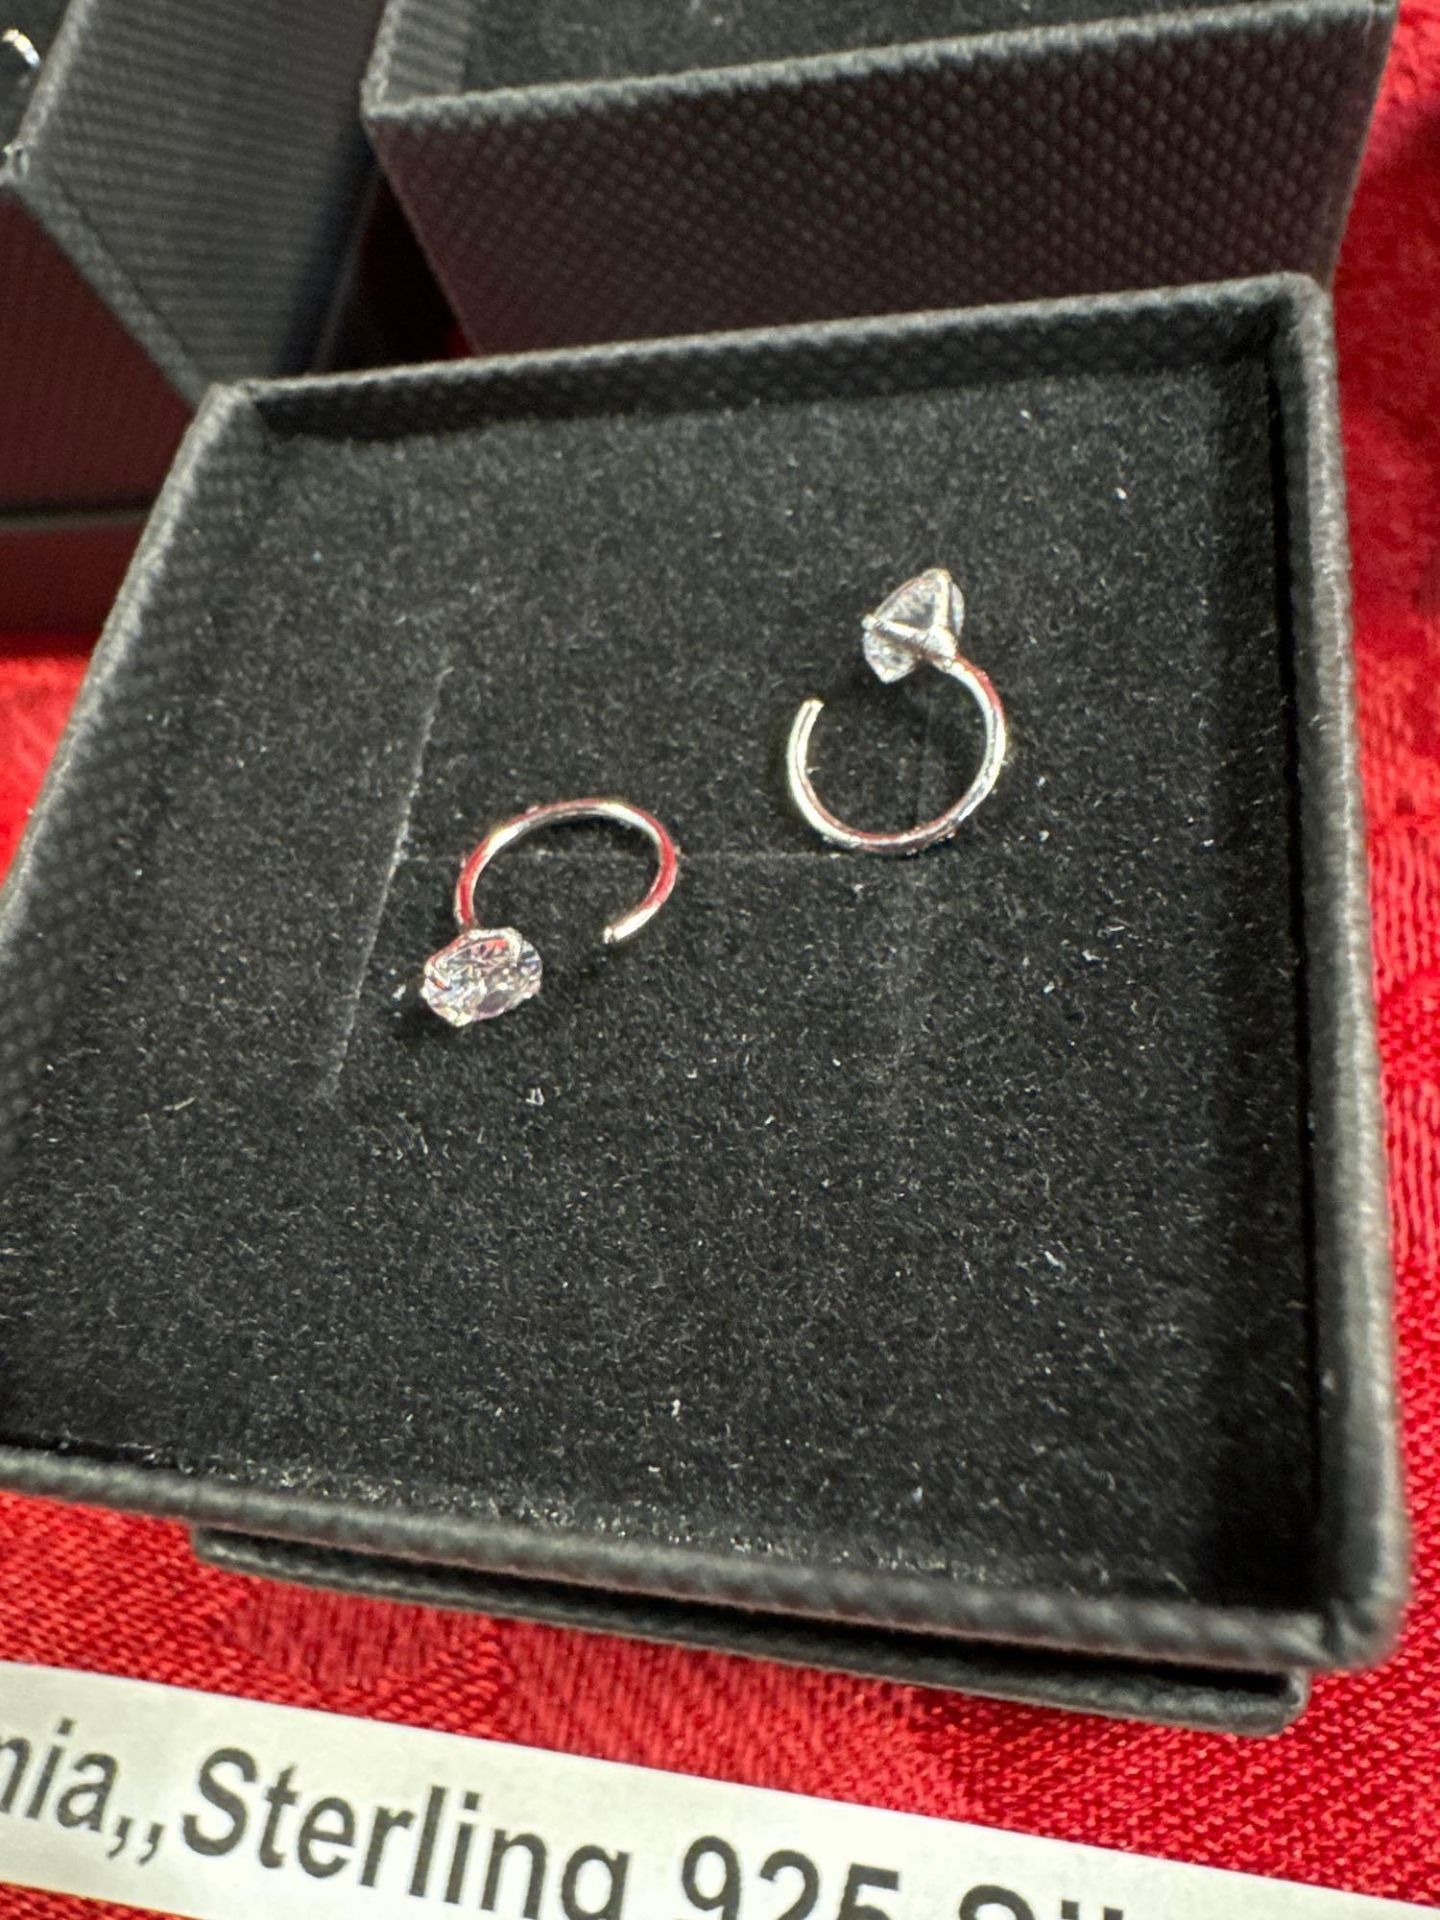 *7 Zerconia Sterling 925 Silver Stud Earrings - Image 2 of 3